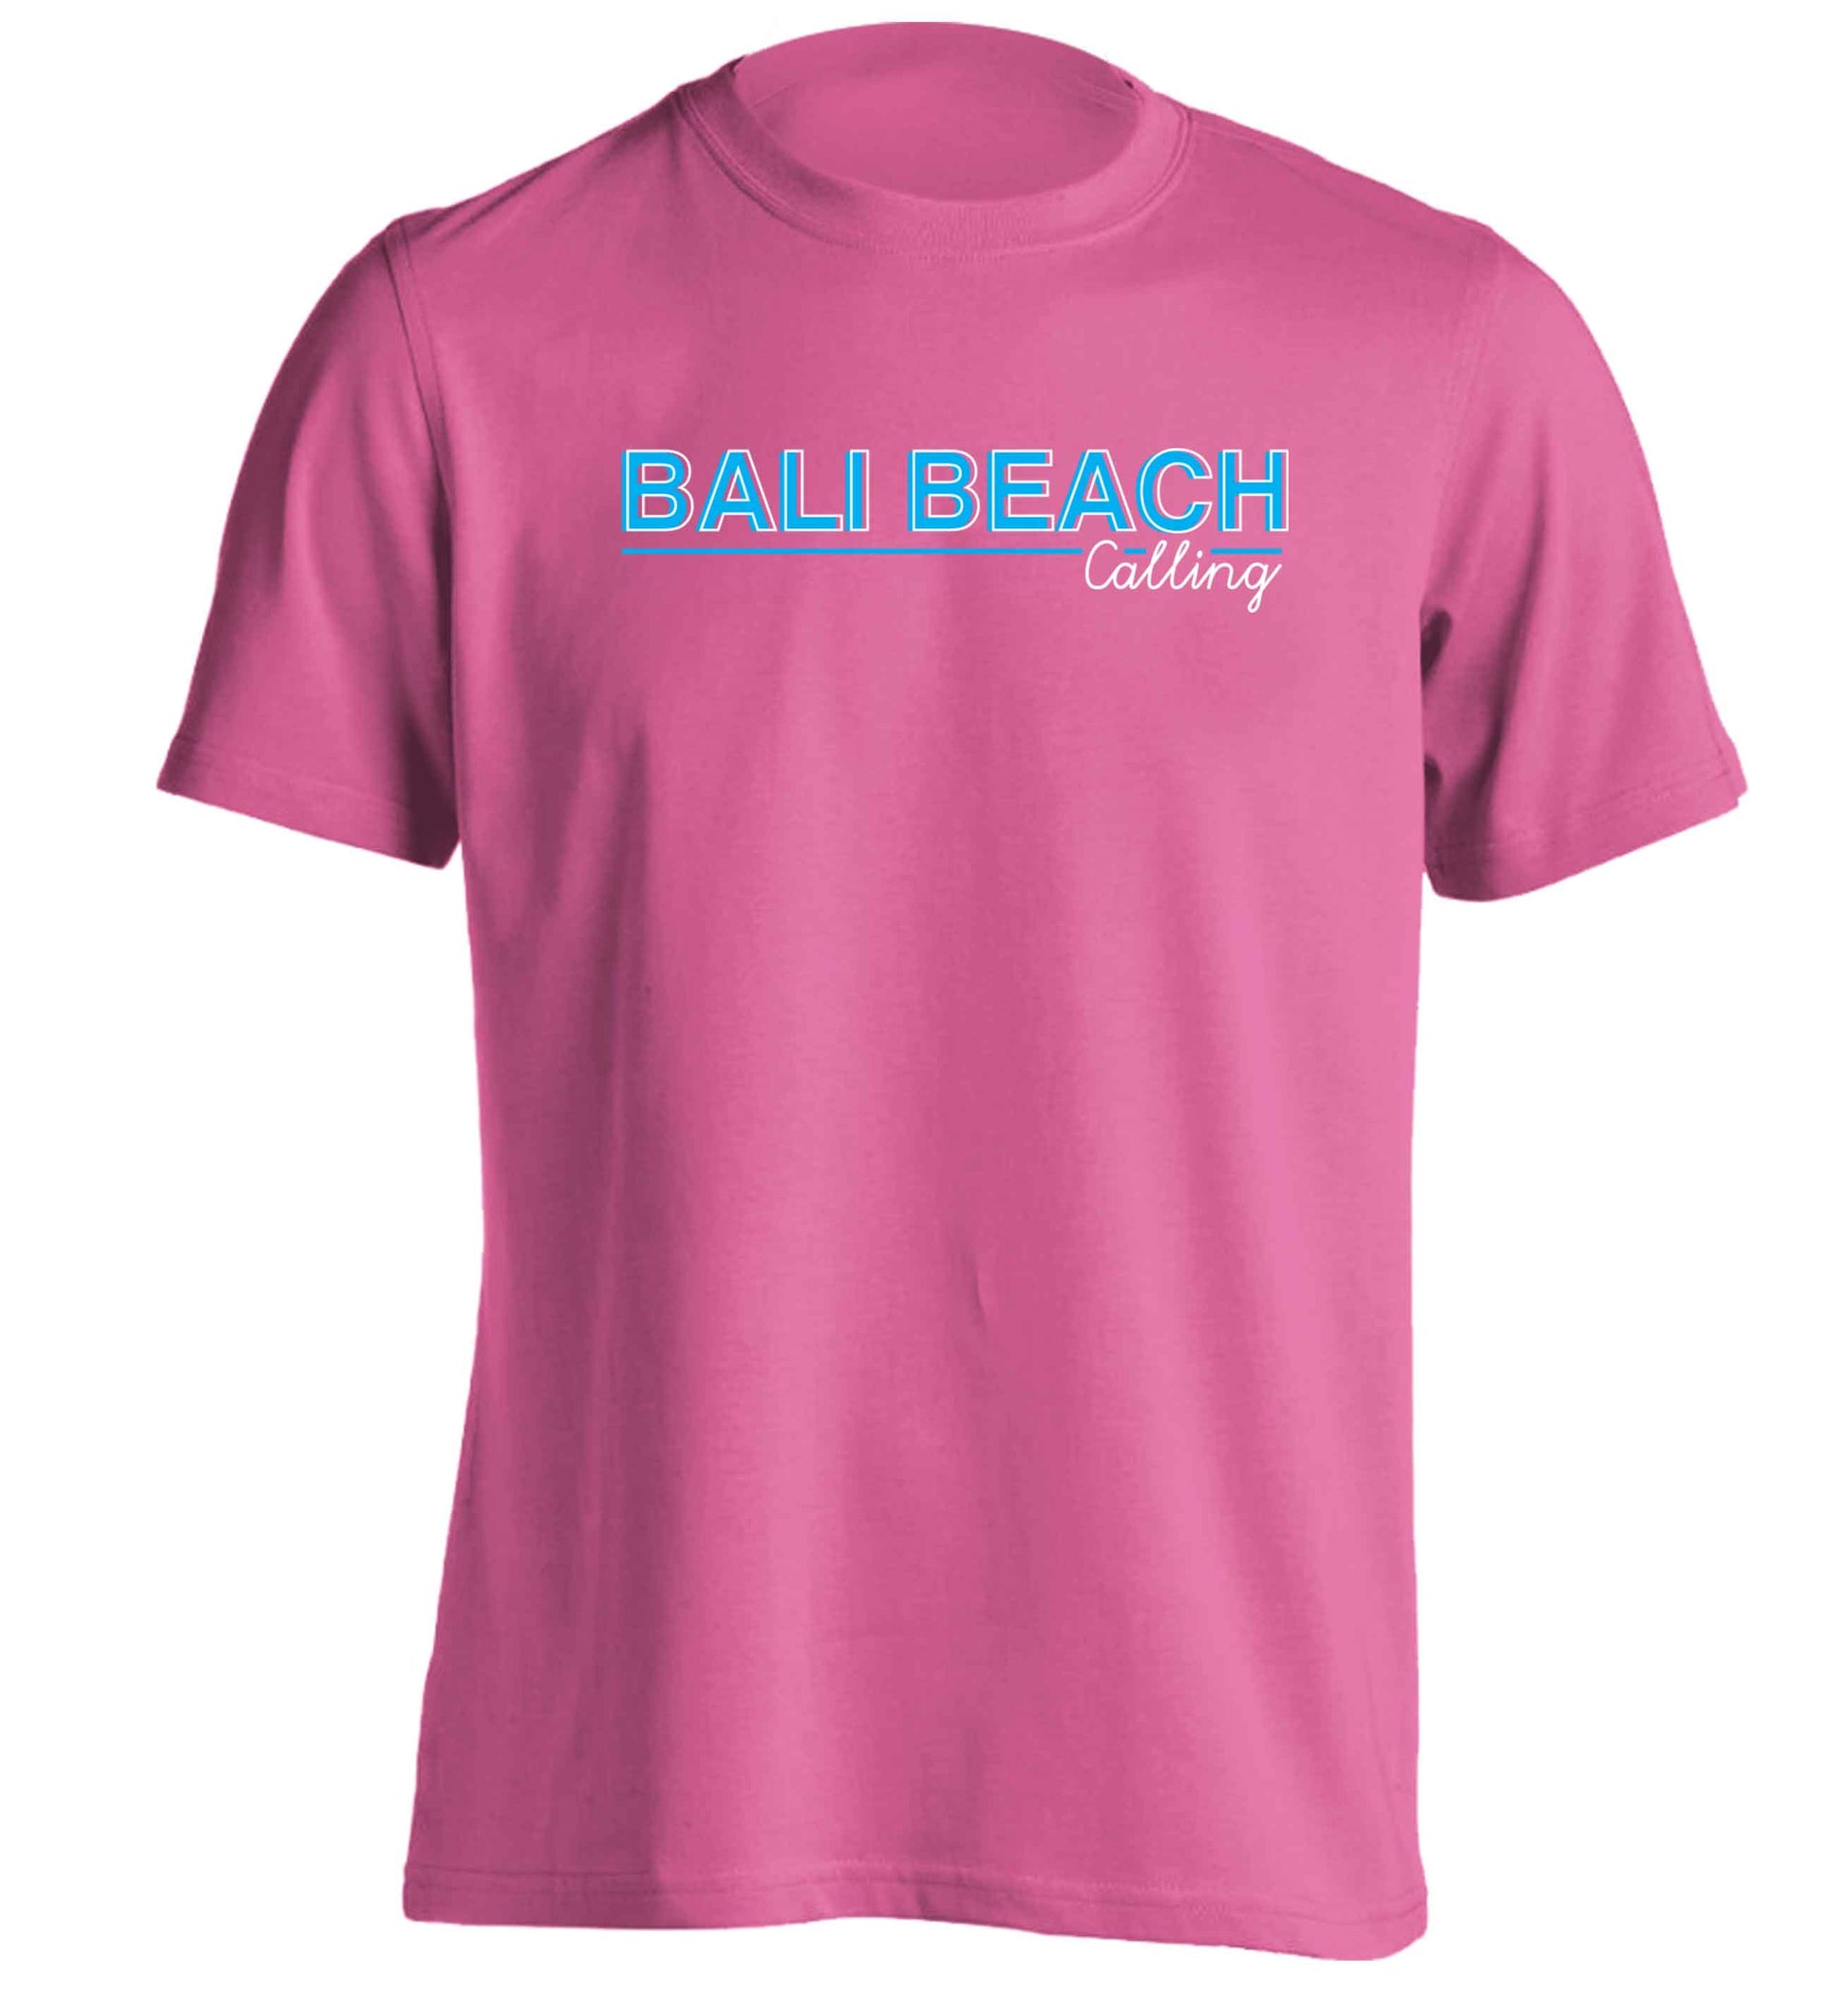 Bali beach calling adults unisex pink Tshirt 2XL